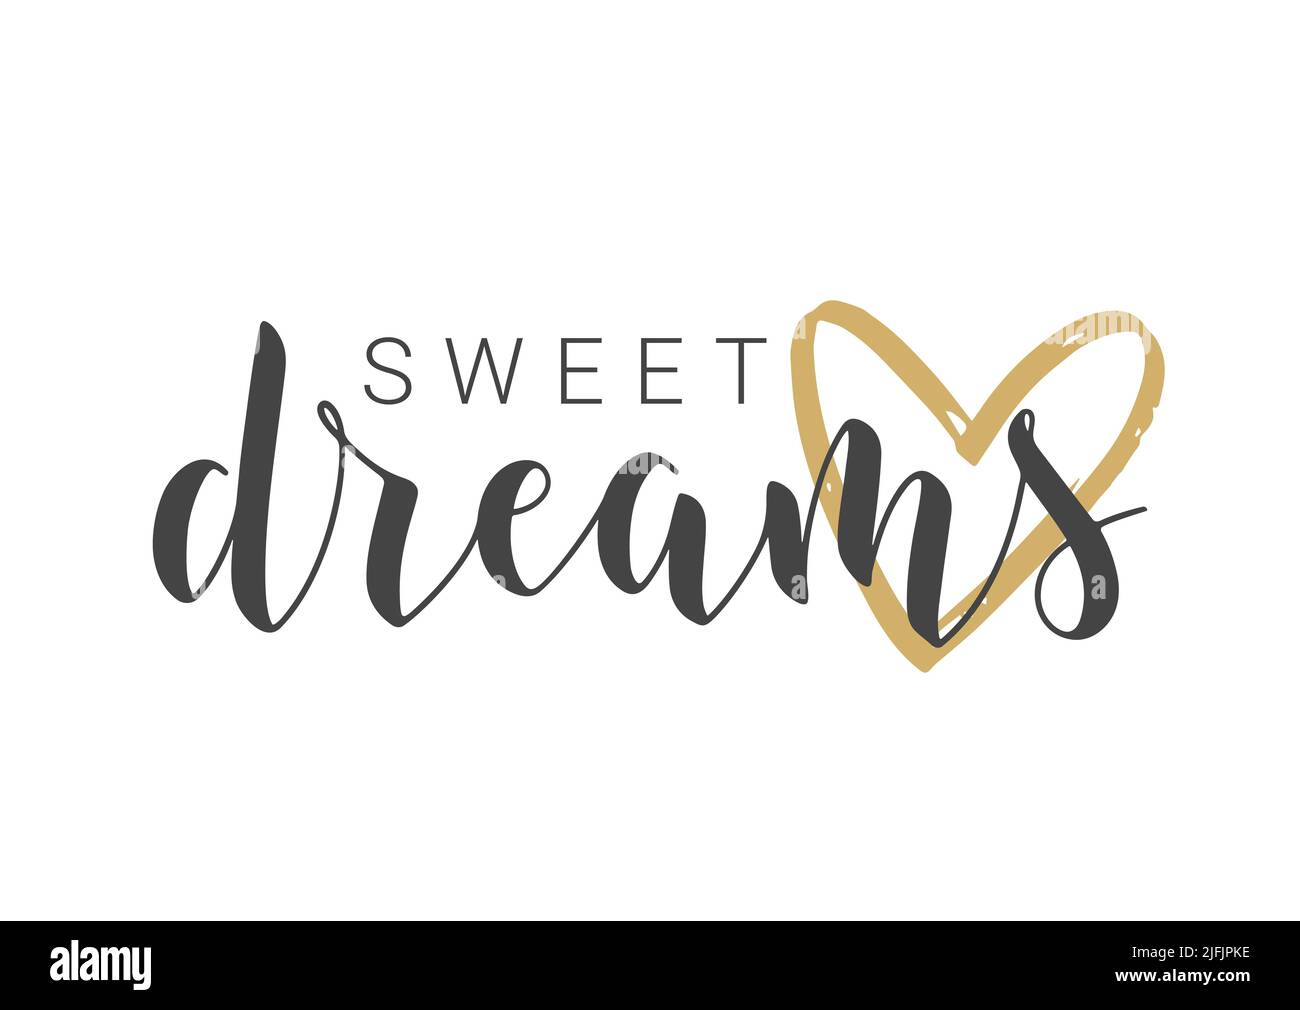 Sweet dreams handwritten lettering inscription hi-res stock